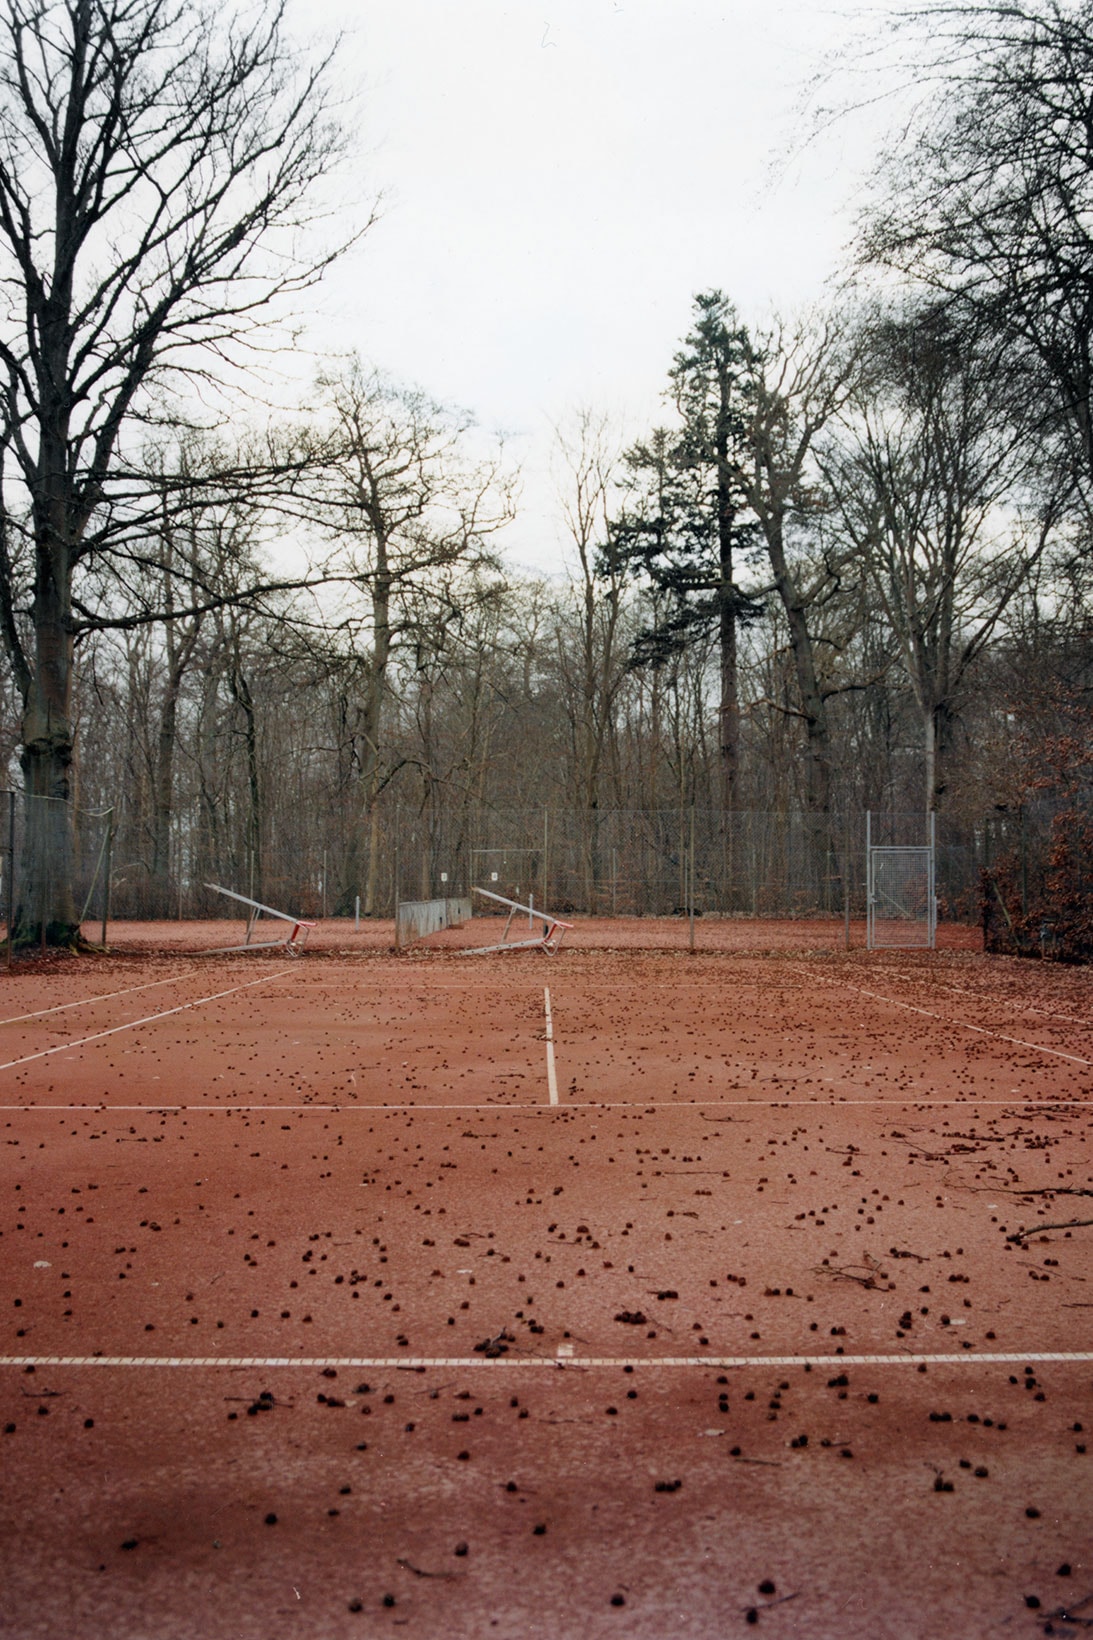 tennis court sand woods trees